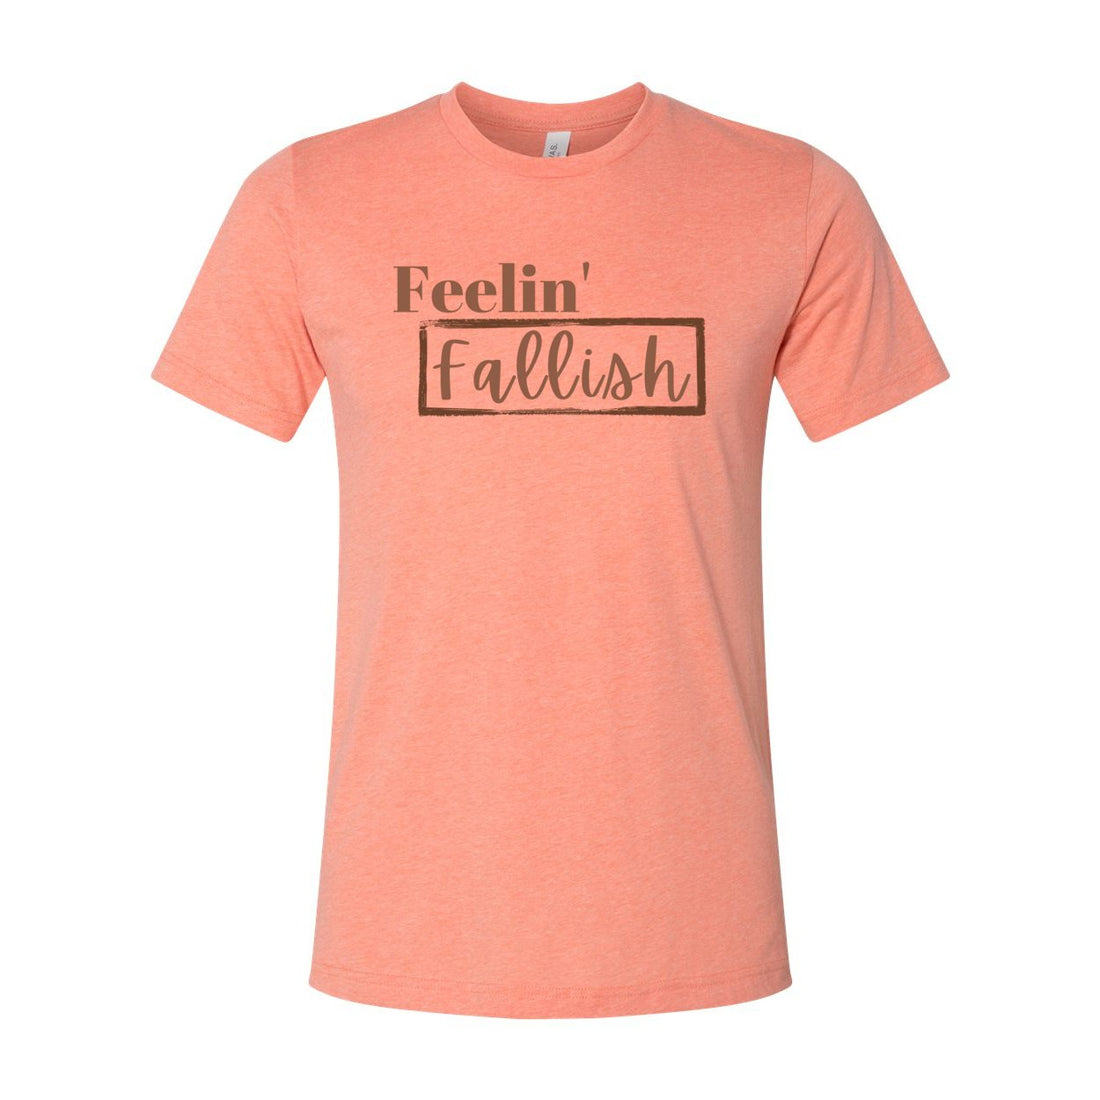 Feelin' Fallish - T-Shirts - Positively Sassy - Feelin' Fallish